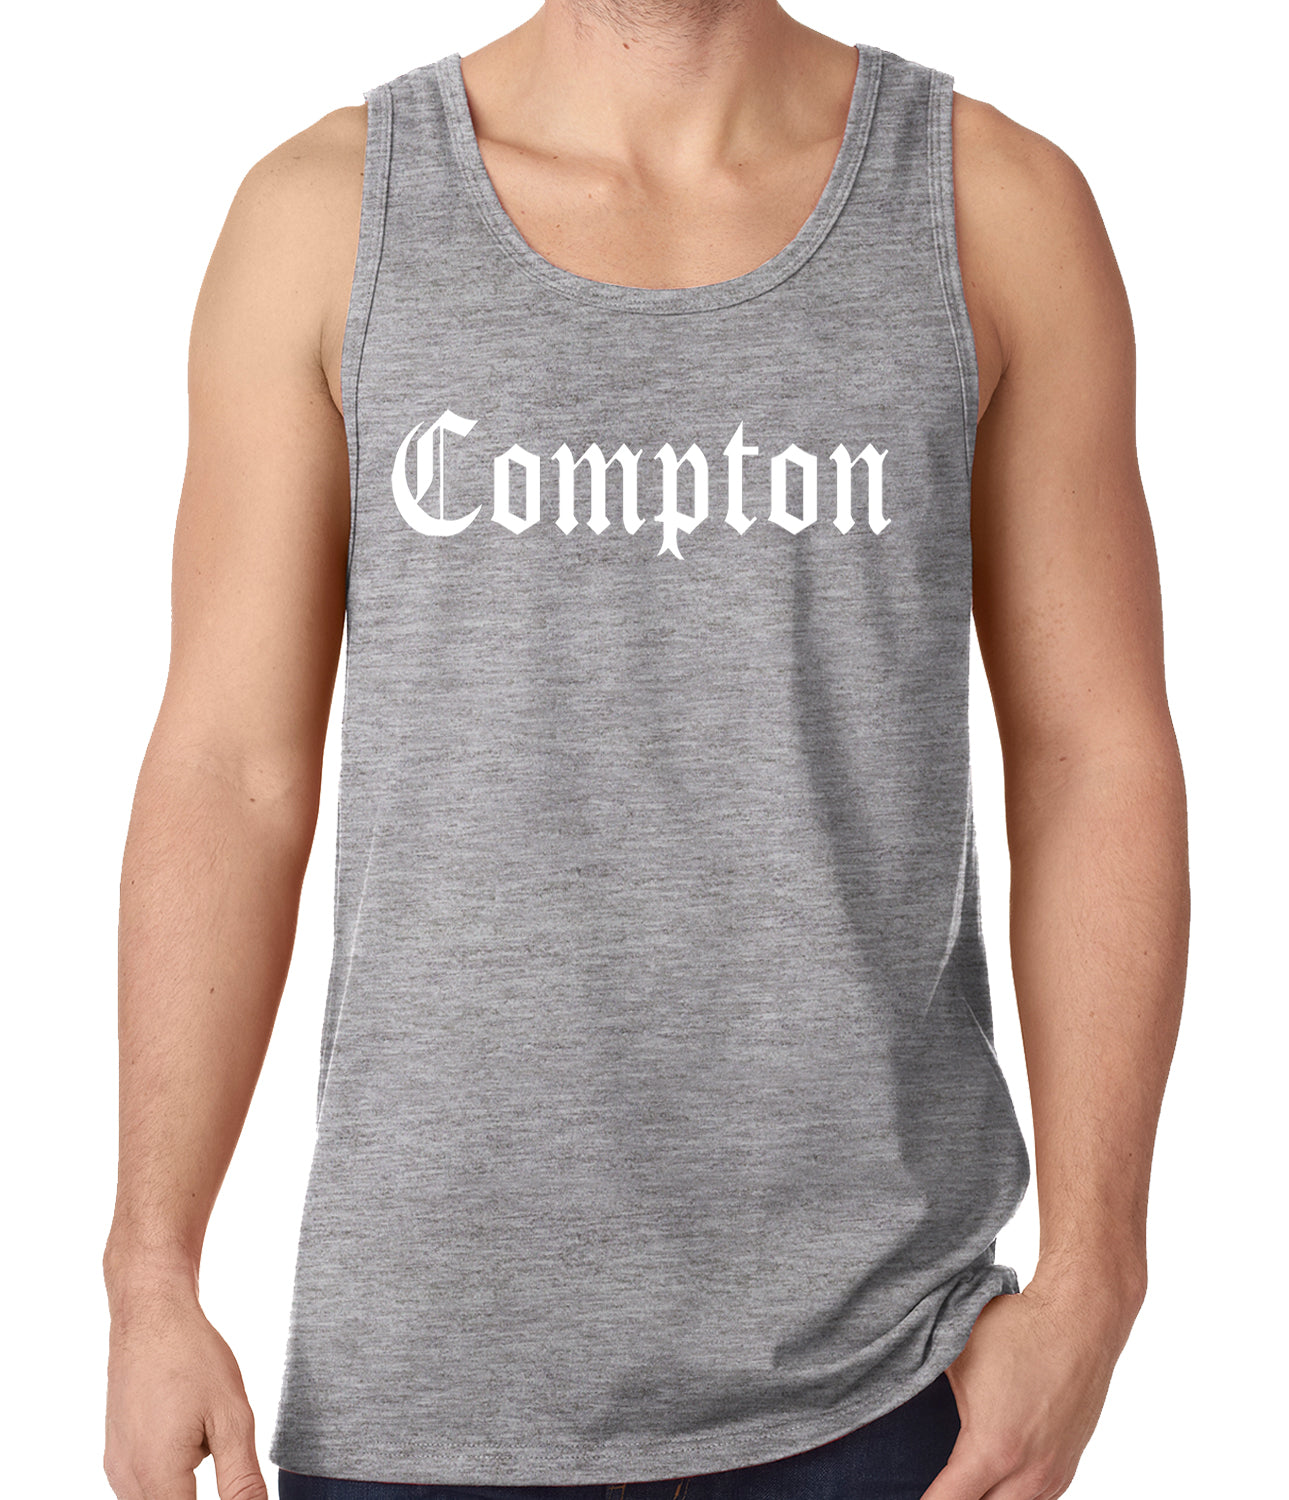 City Of Compton, California Tank Top